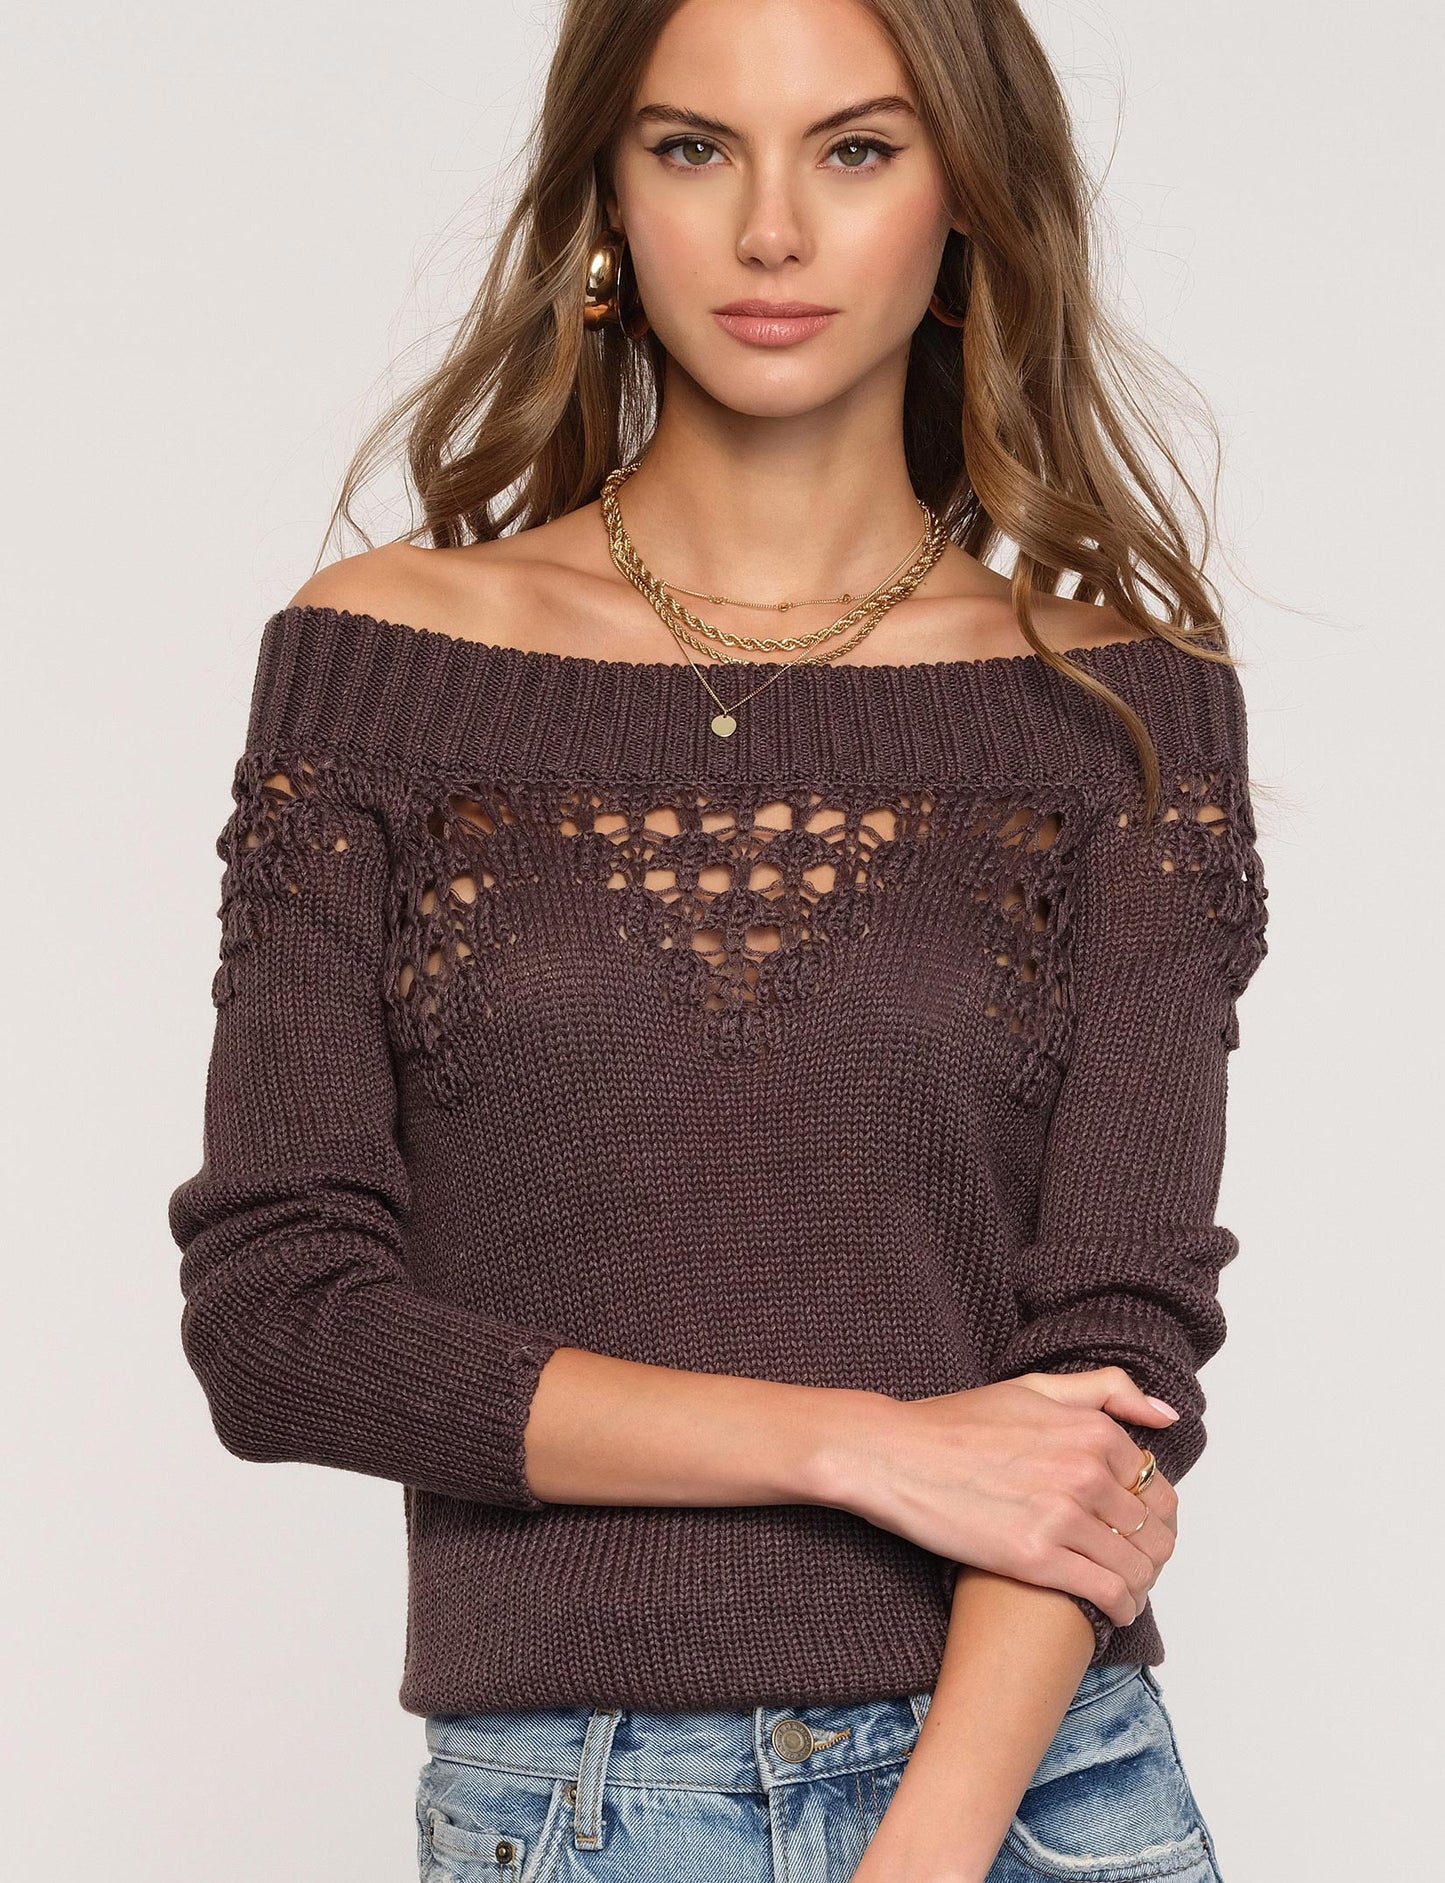 Heartloom, Carina Sweater in Mocha - Boutique Dandelion